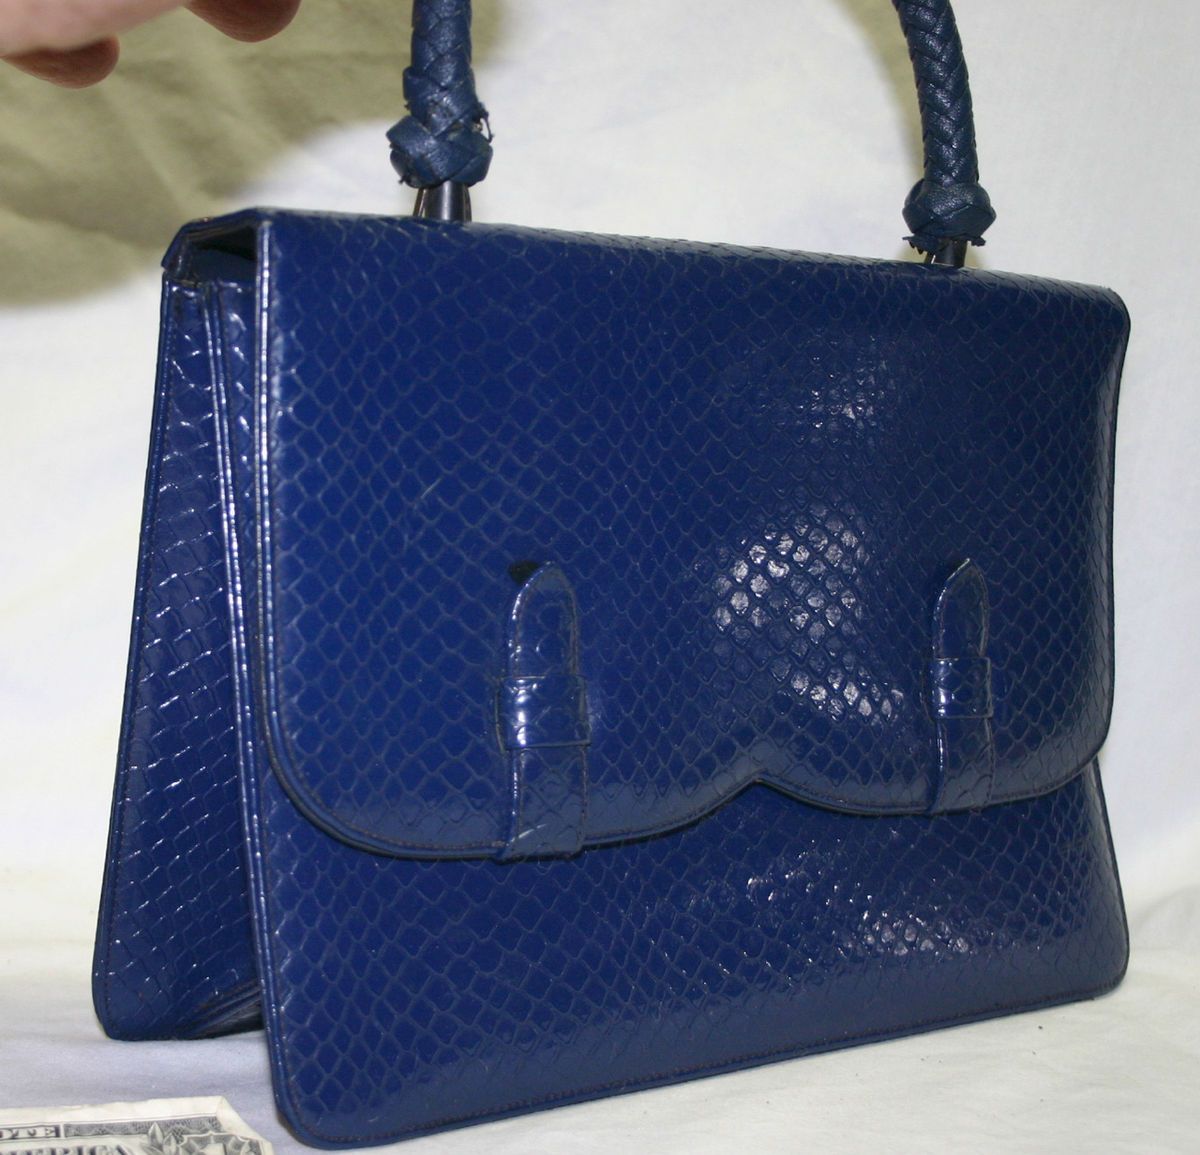  Susan Gail Original Hand Bag Purse Blue Faux Snakeskin L K